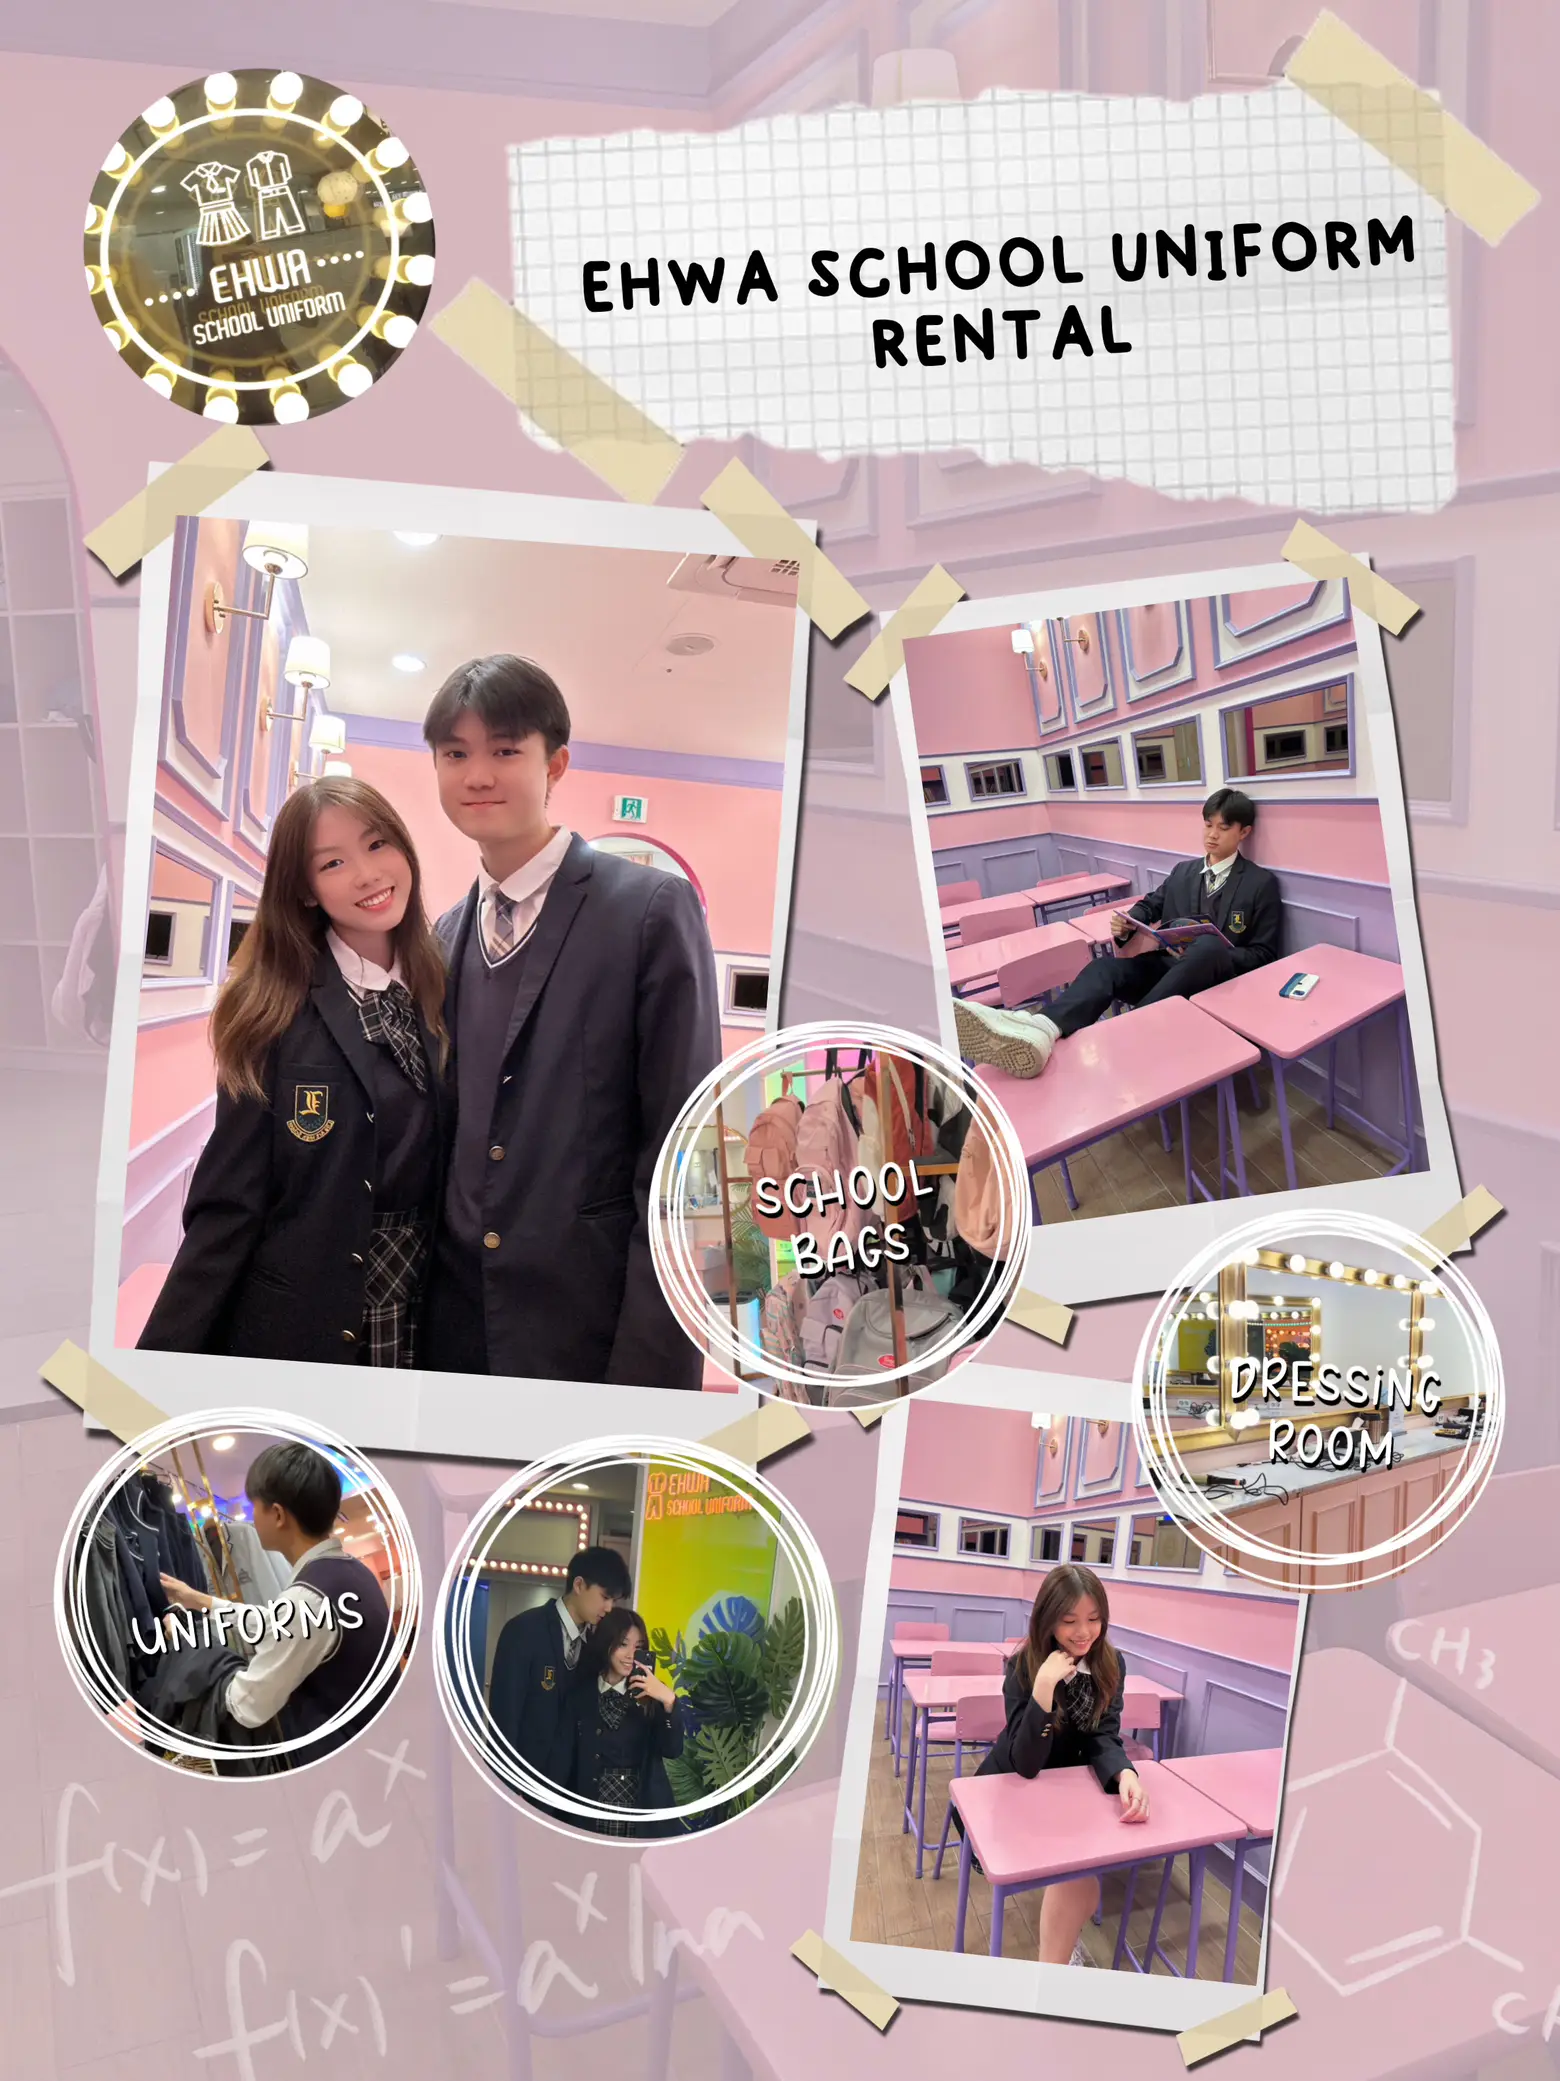 Ehwa Korean School Uniform Rental Experience, Seoul, South Korea - Klook  United States